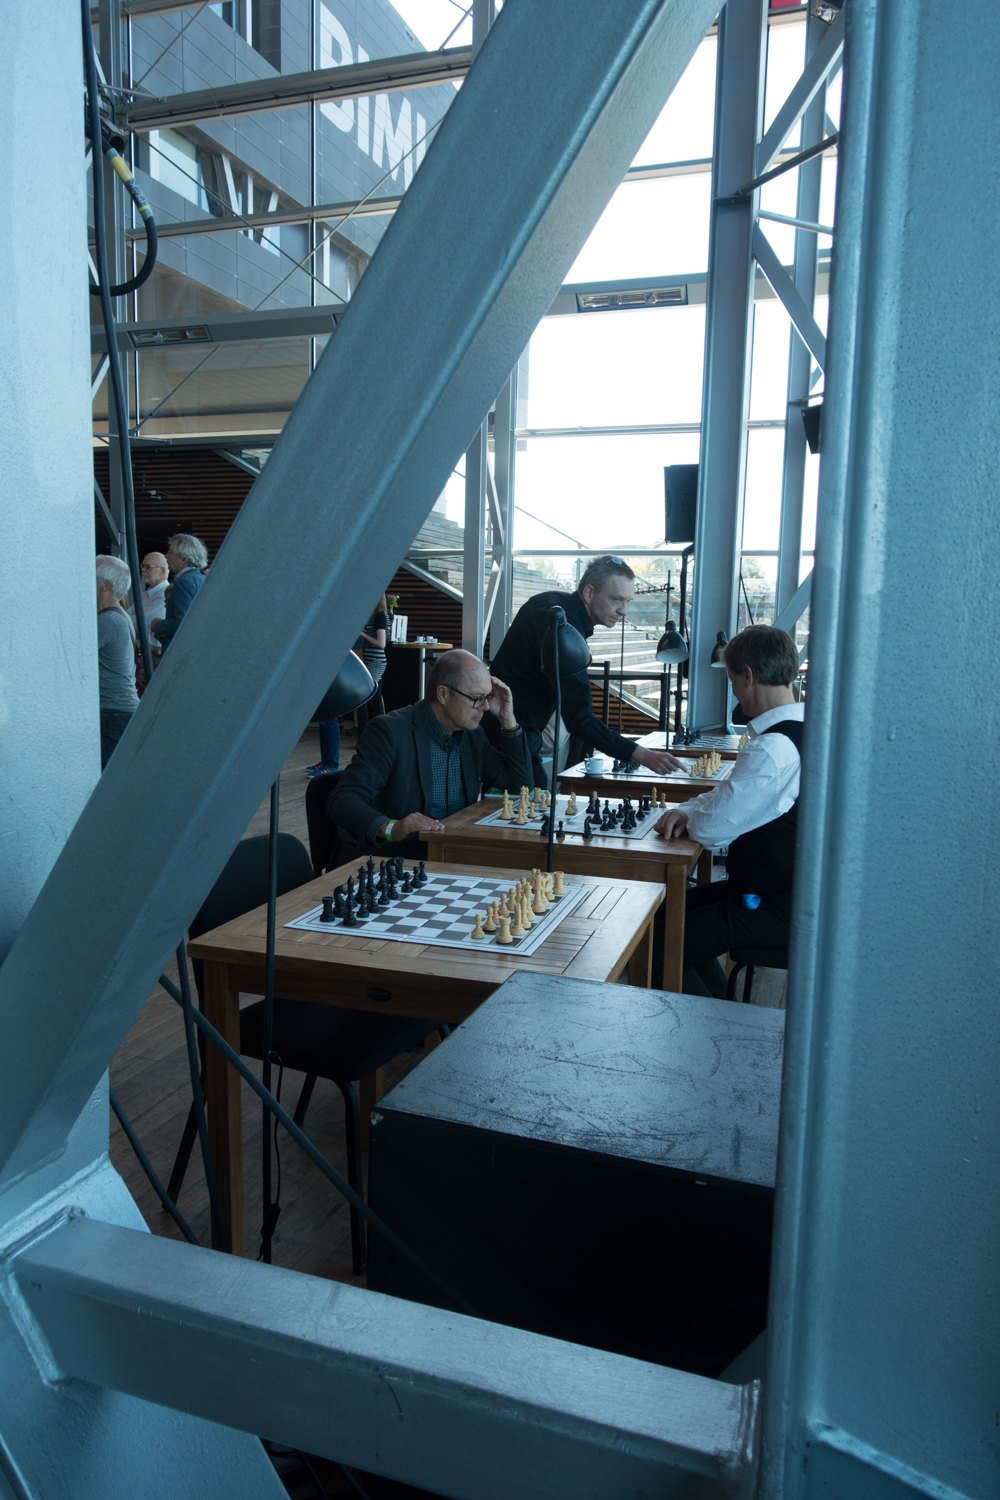  Chess&nbsp; during Urbo Kune at&nbsp;  the Muziekgebouw aan 't IJ.&nbsp;Photo by Canan Marasligil&nbsp;  